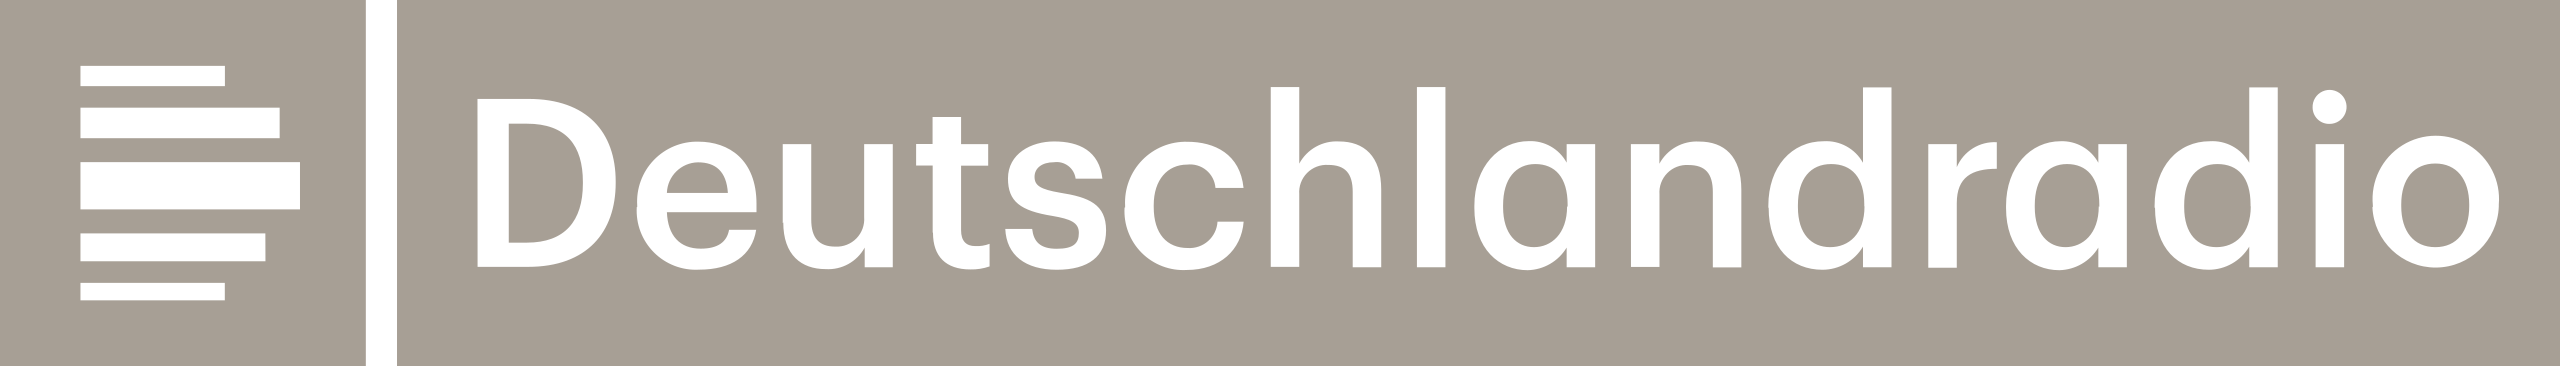 Deutschlandradio Logo